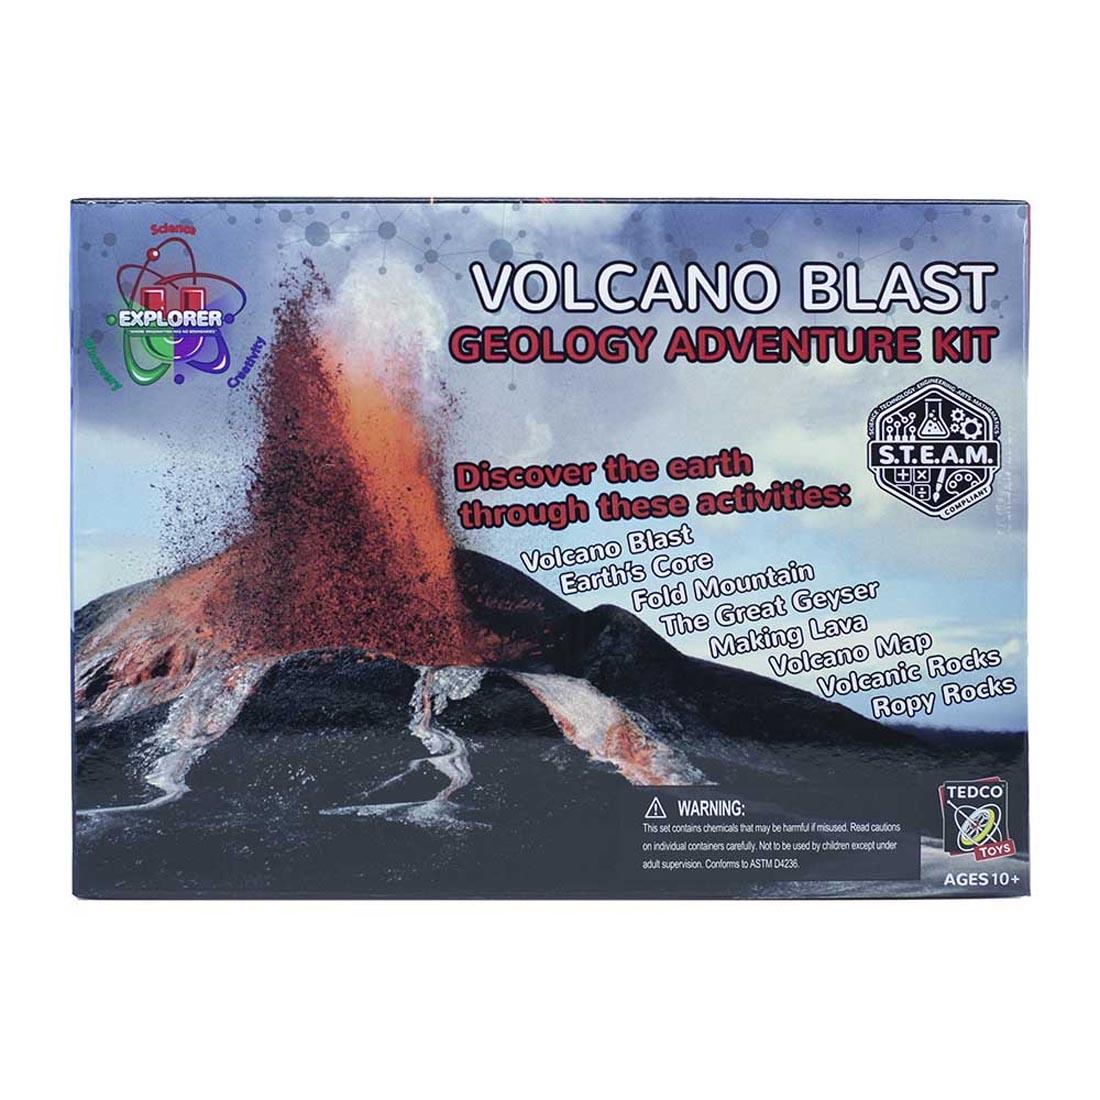 Volcano Blast Geology Adventure Kit by Tedco